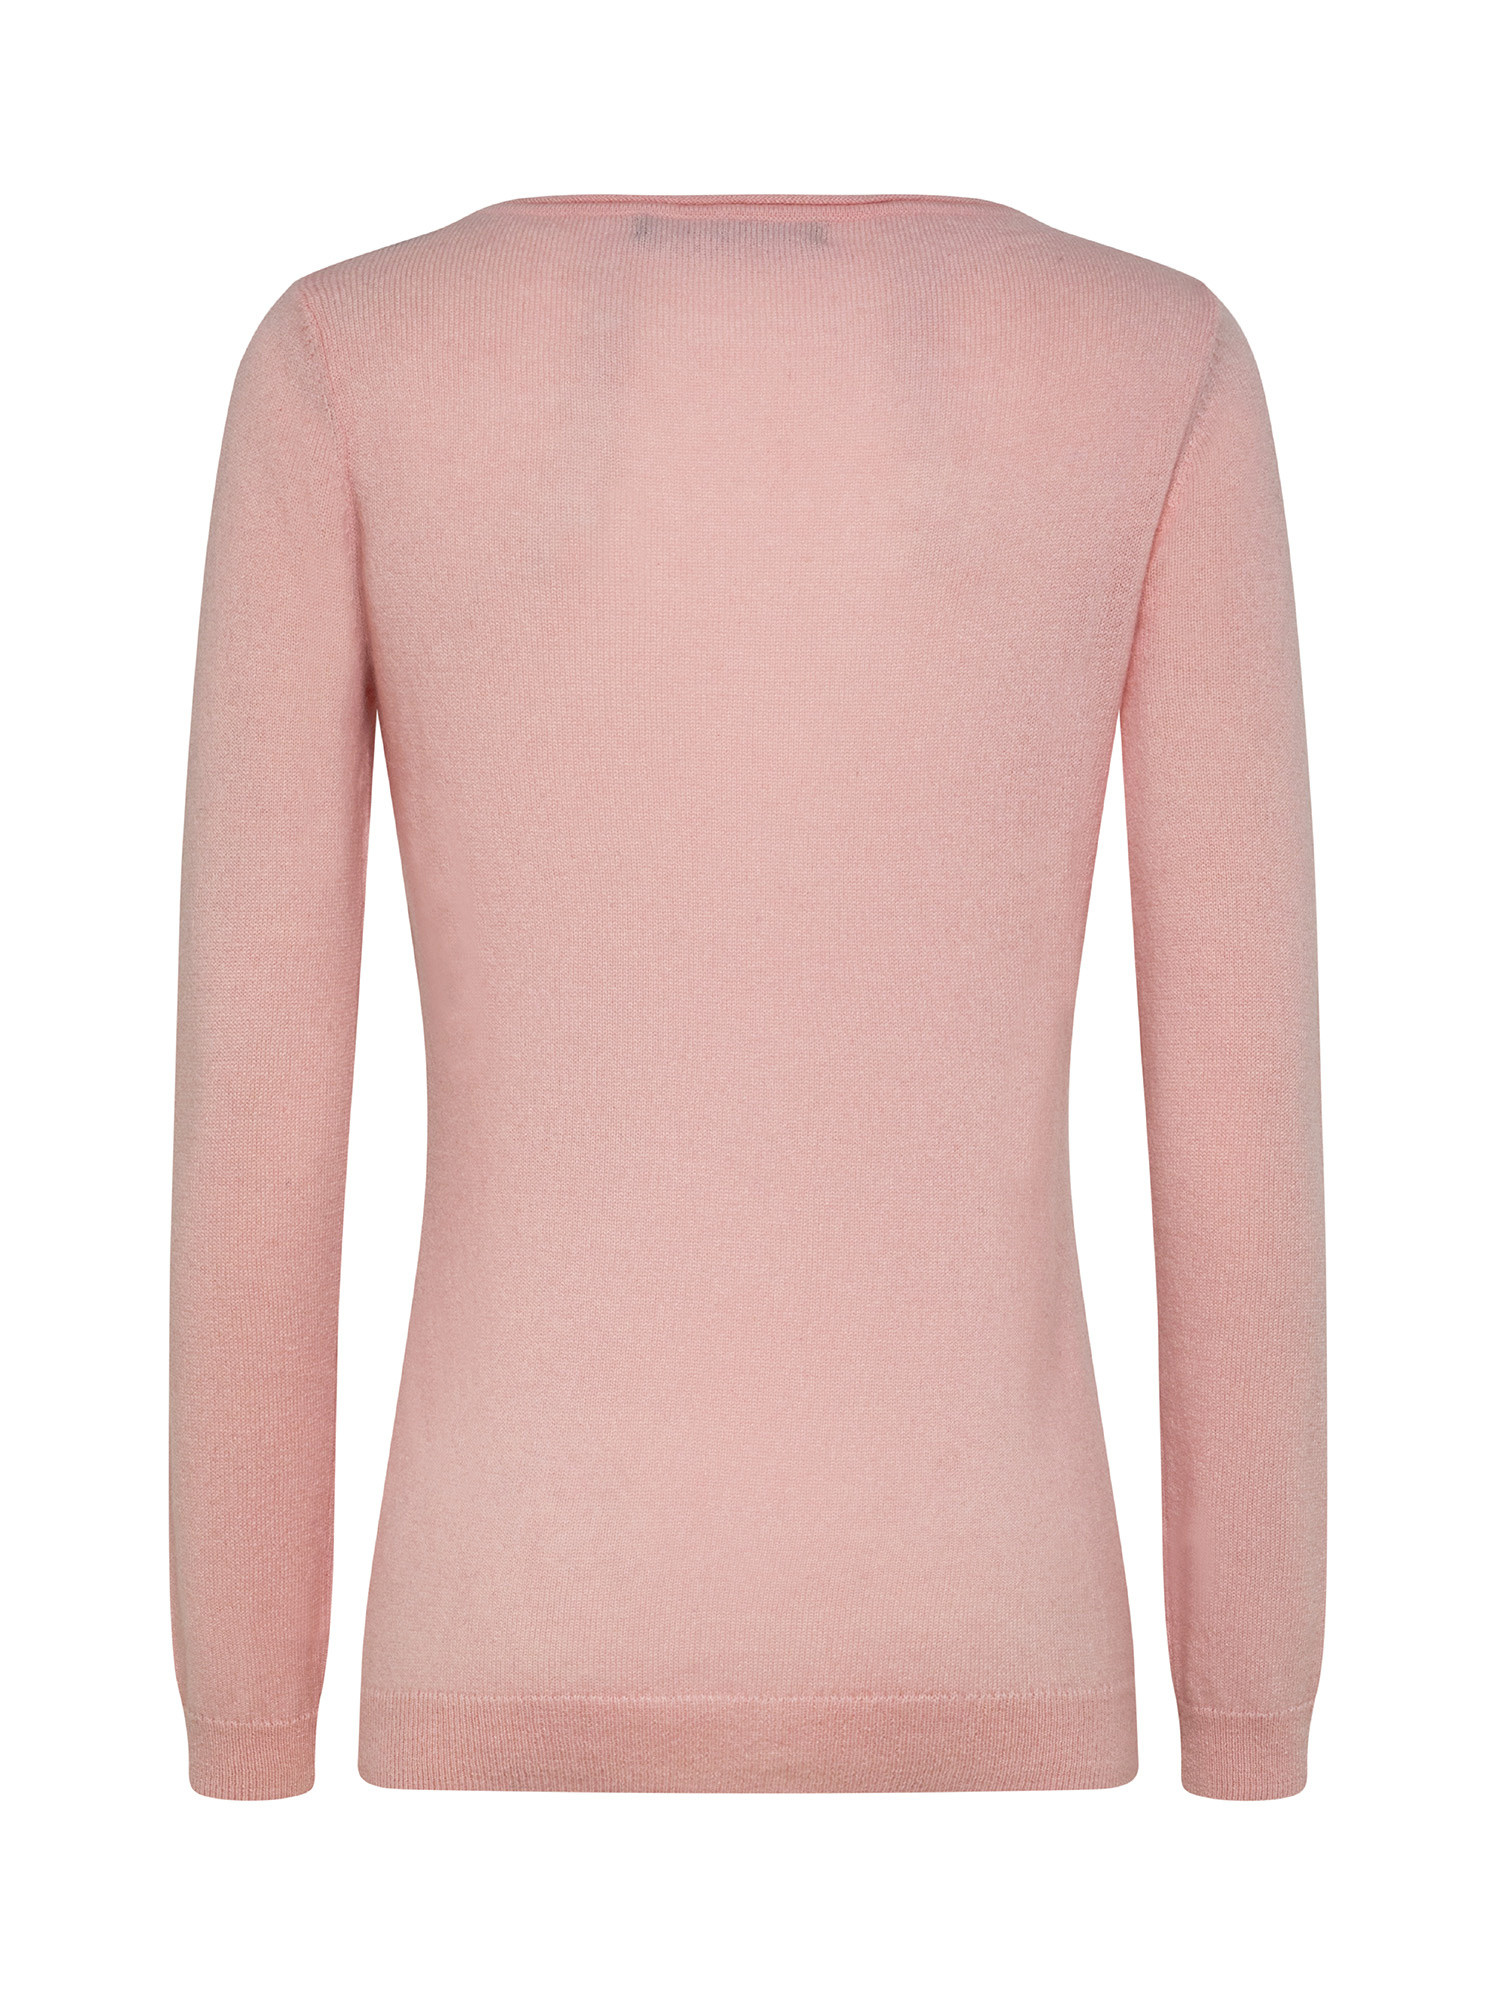 Koan - Pure cashmere boat neck pullover, Pink, large image number 1